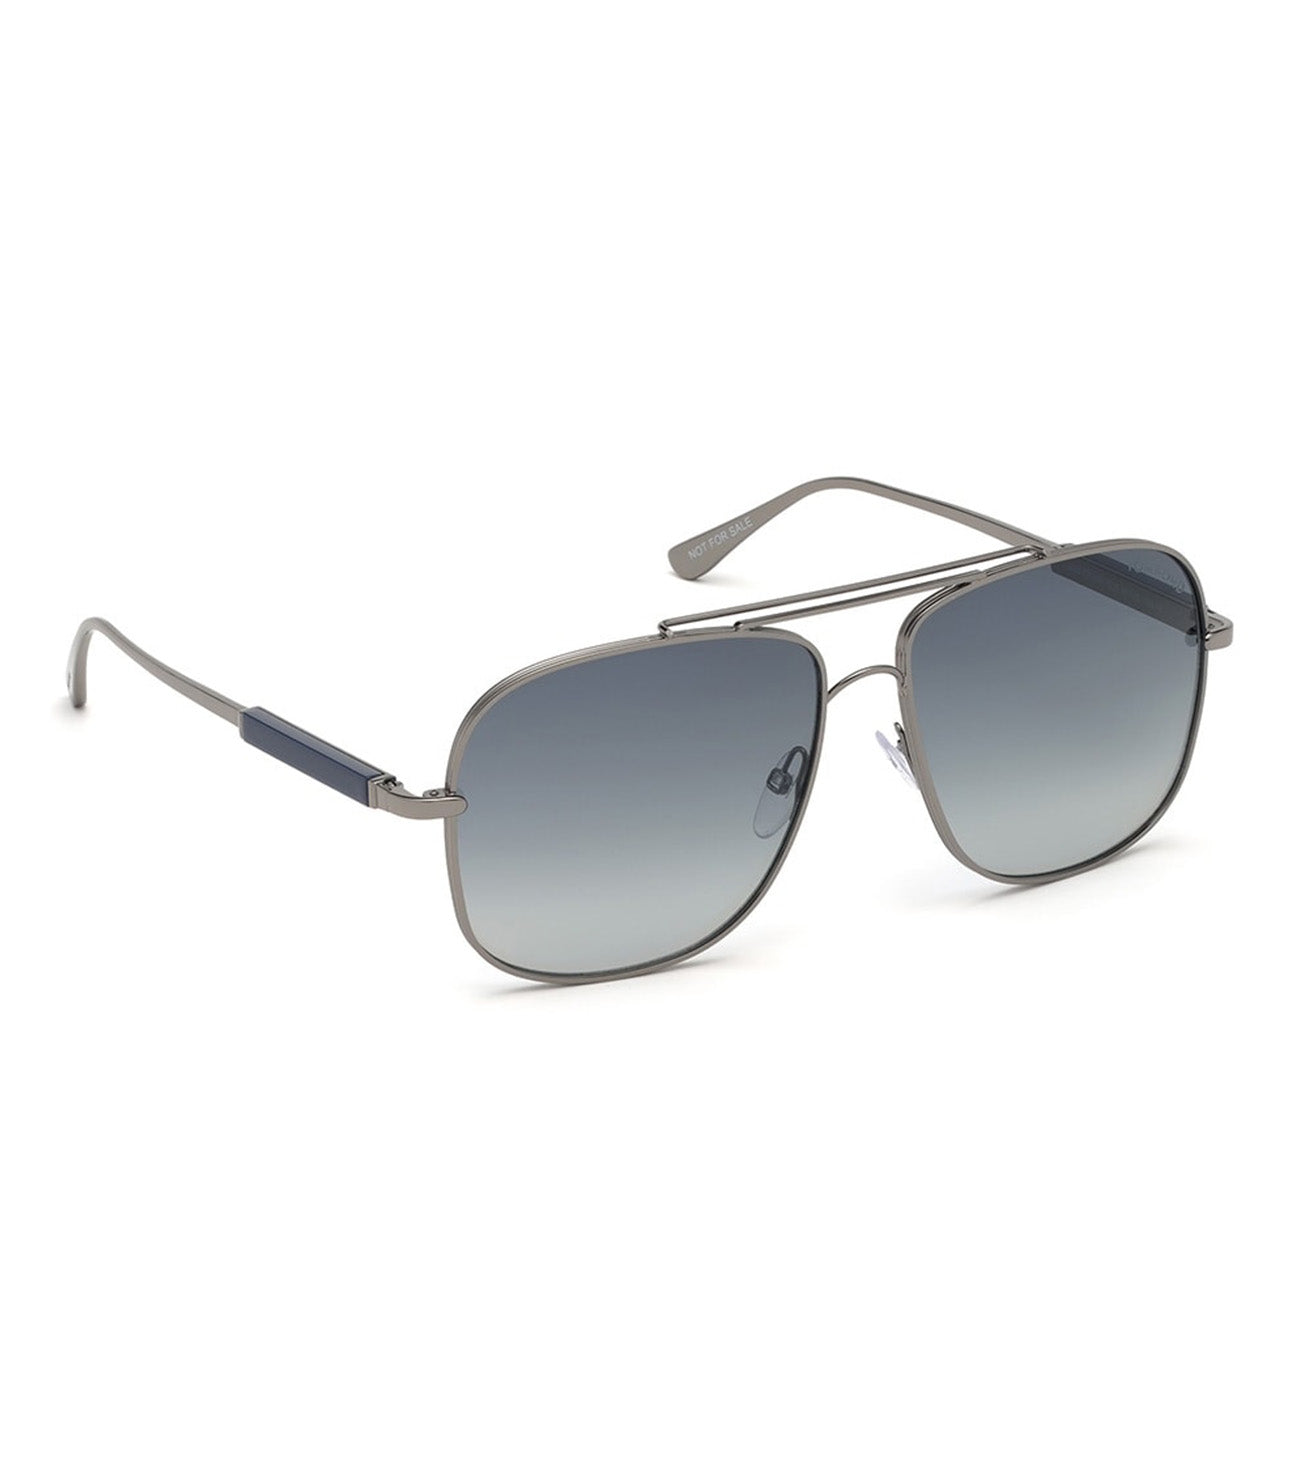 Tom Ford Men's Blue Gradient Aviator Sunglasses